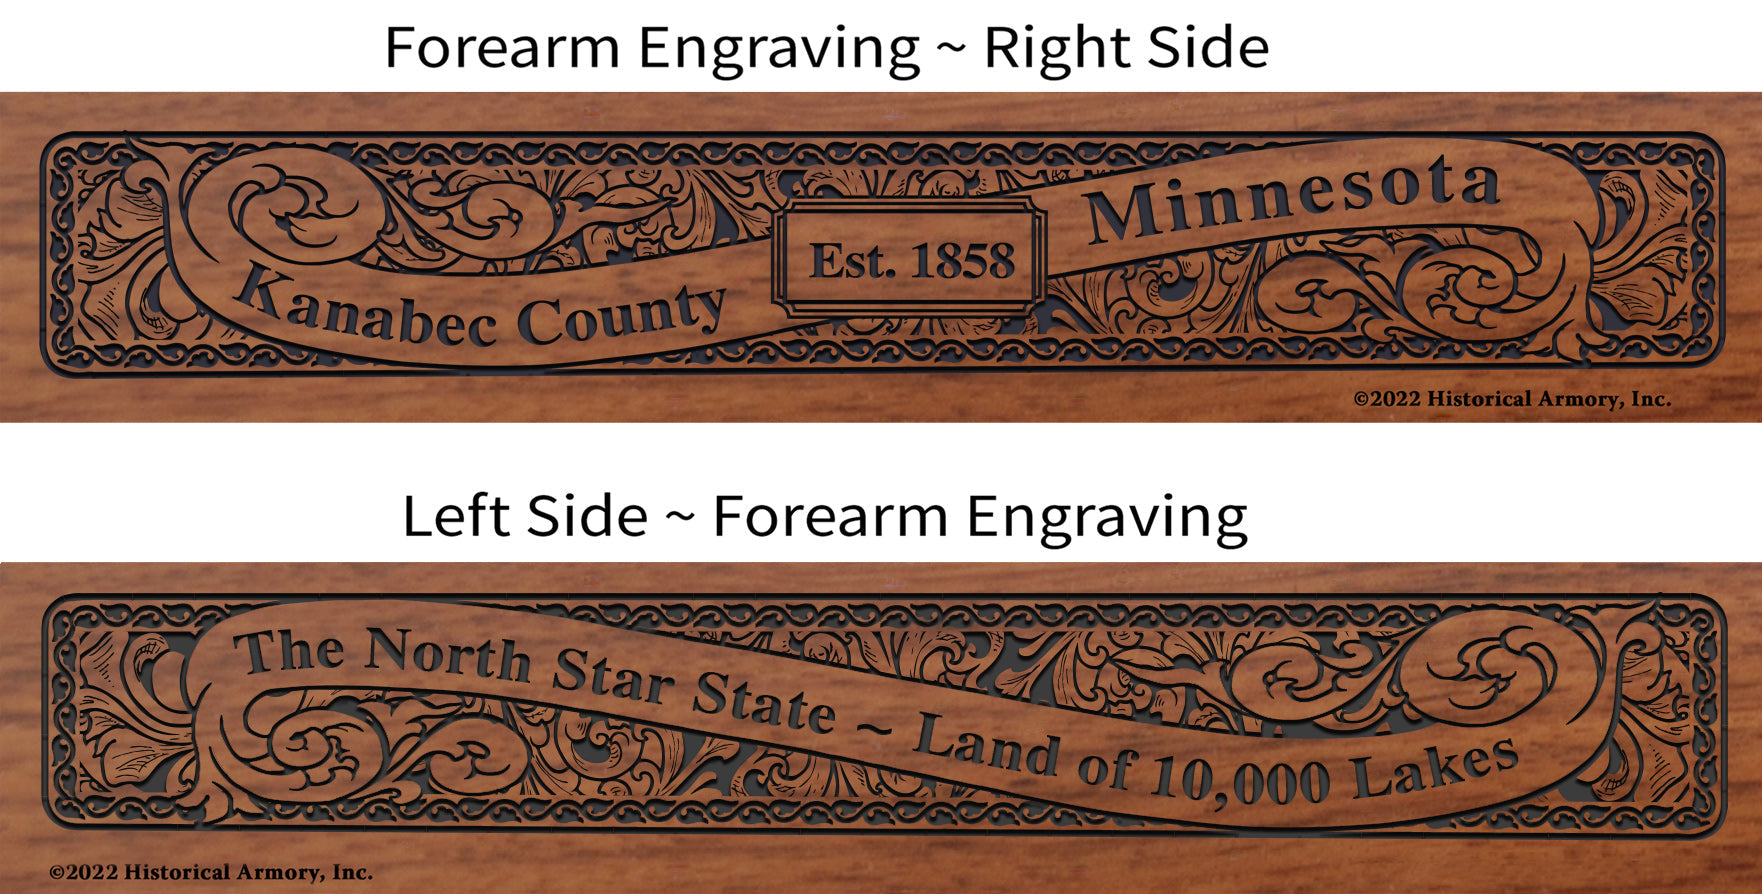 Kanabec County Minnesota Engraved Rifle Forearm